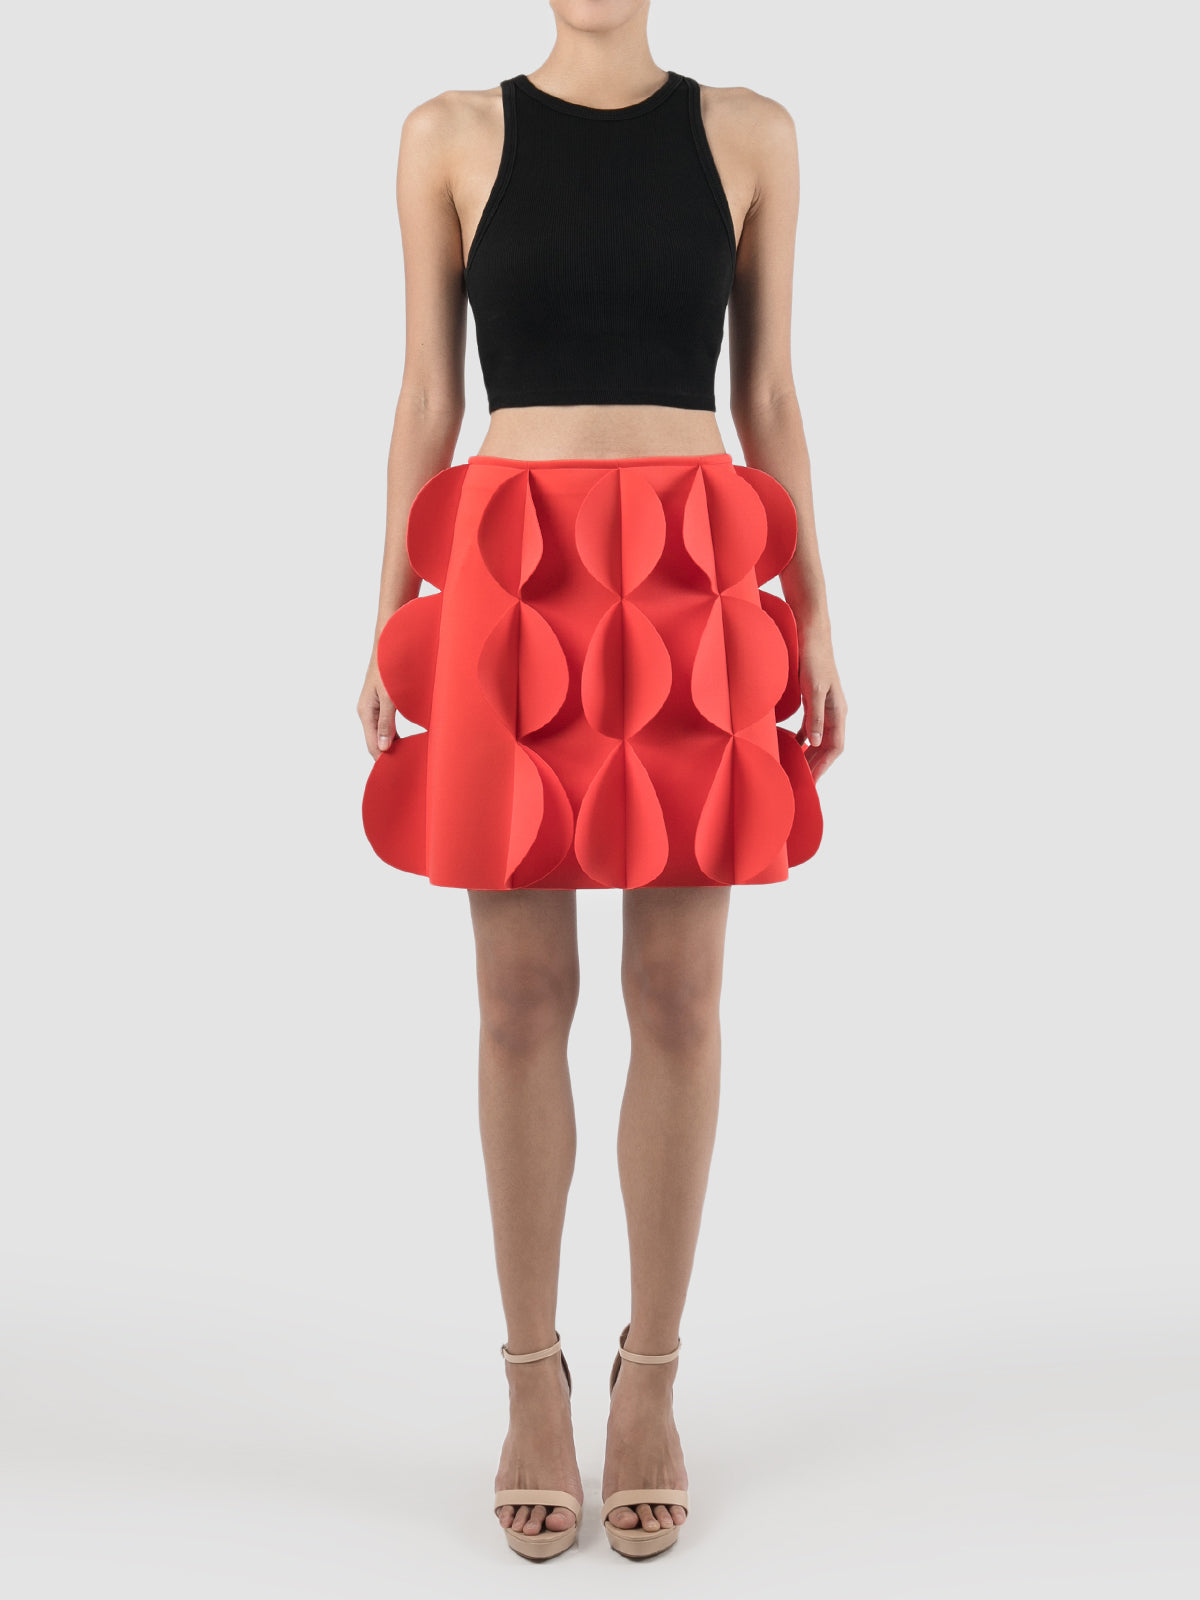 Tristus Cinnabar red statement mini skirt with scalloped lapels